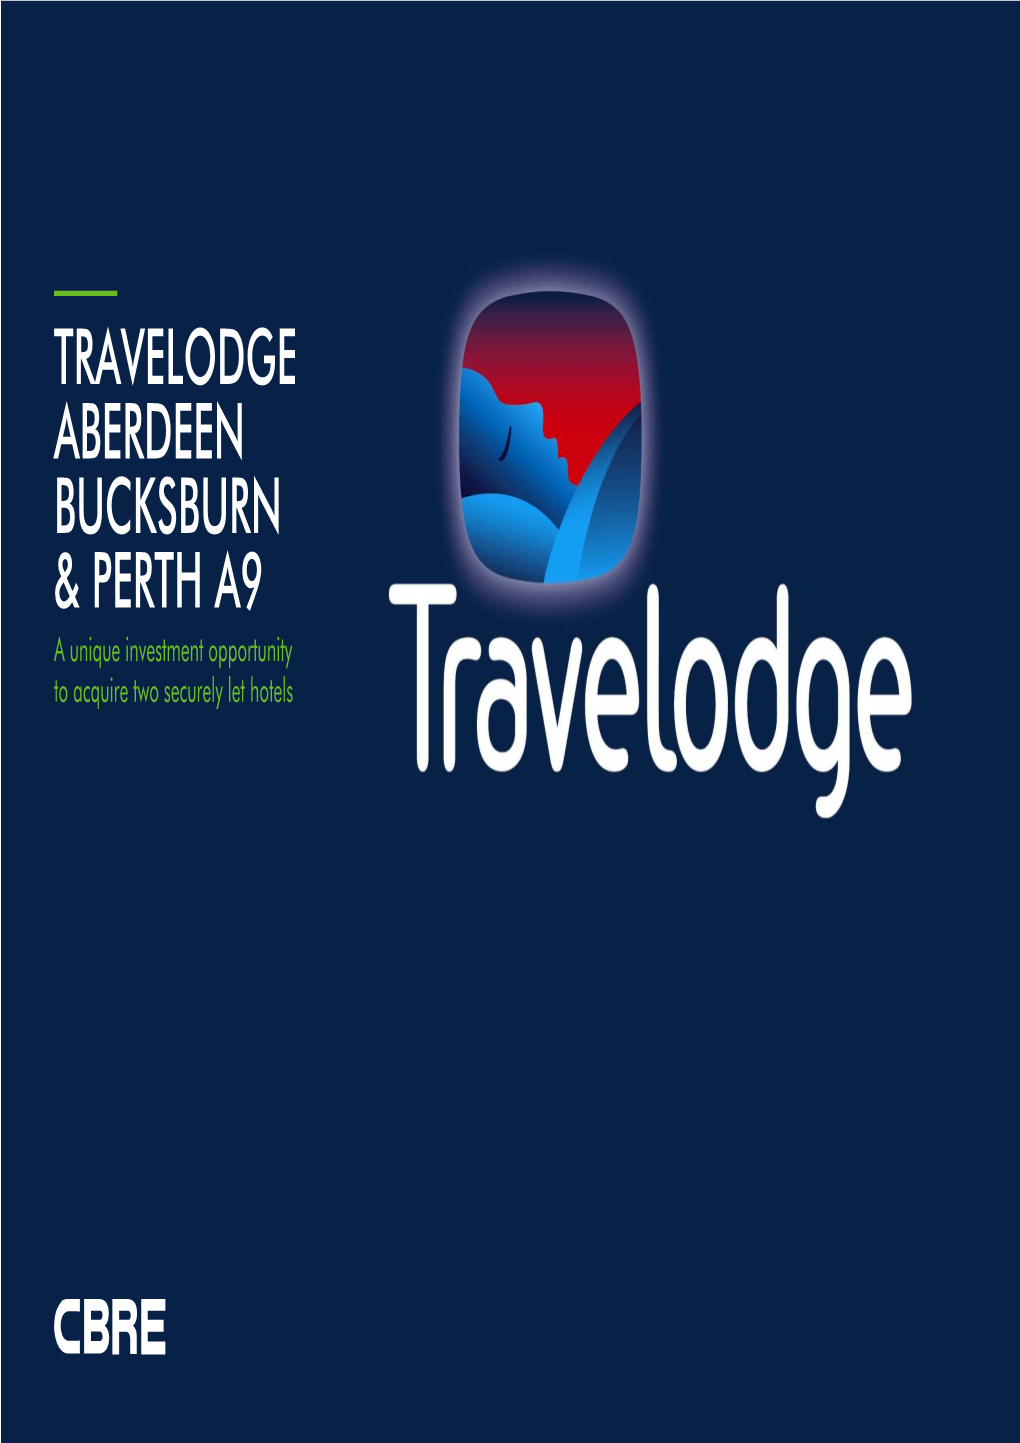 Scotland Travelodges